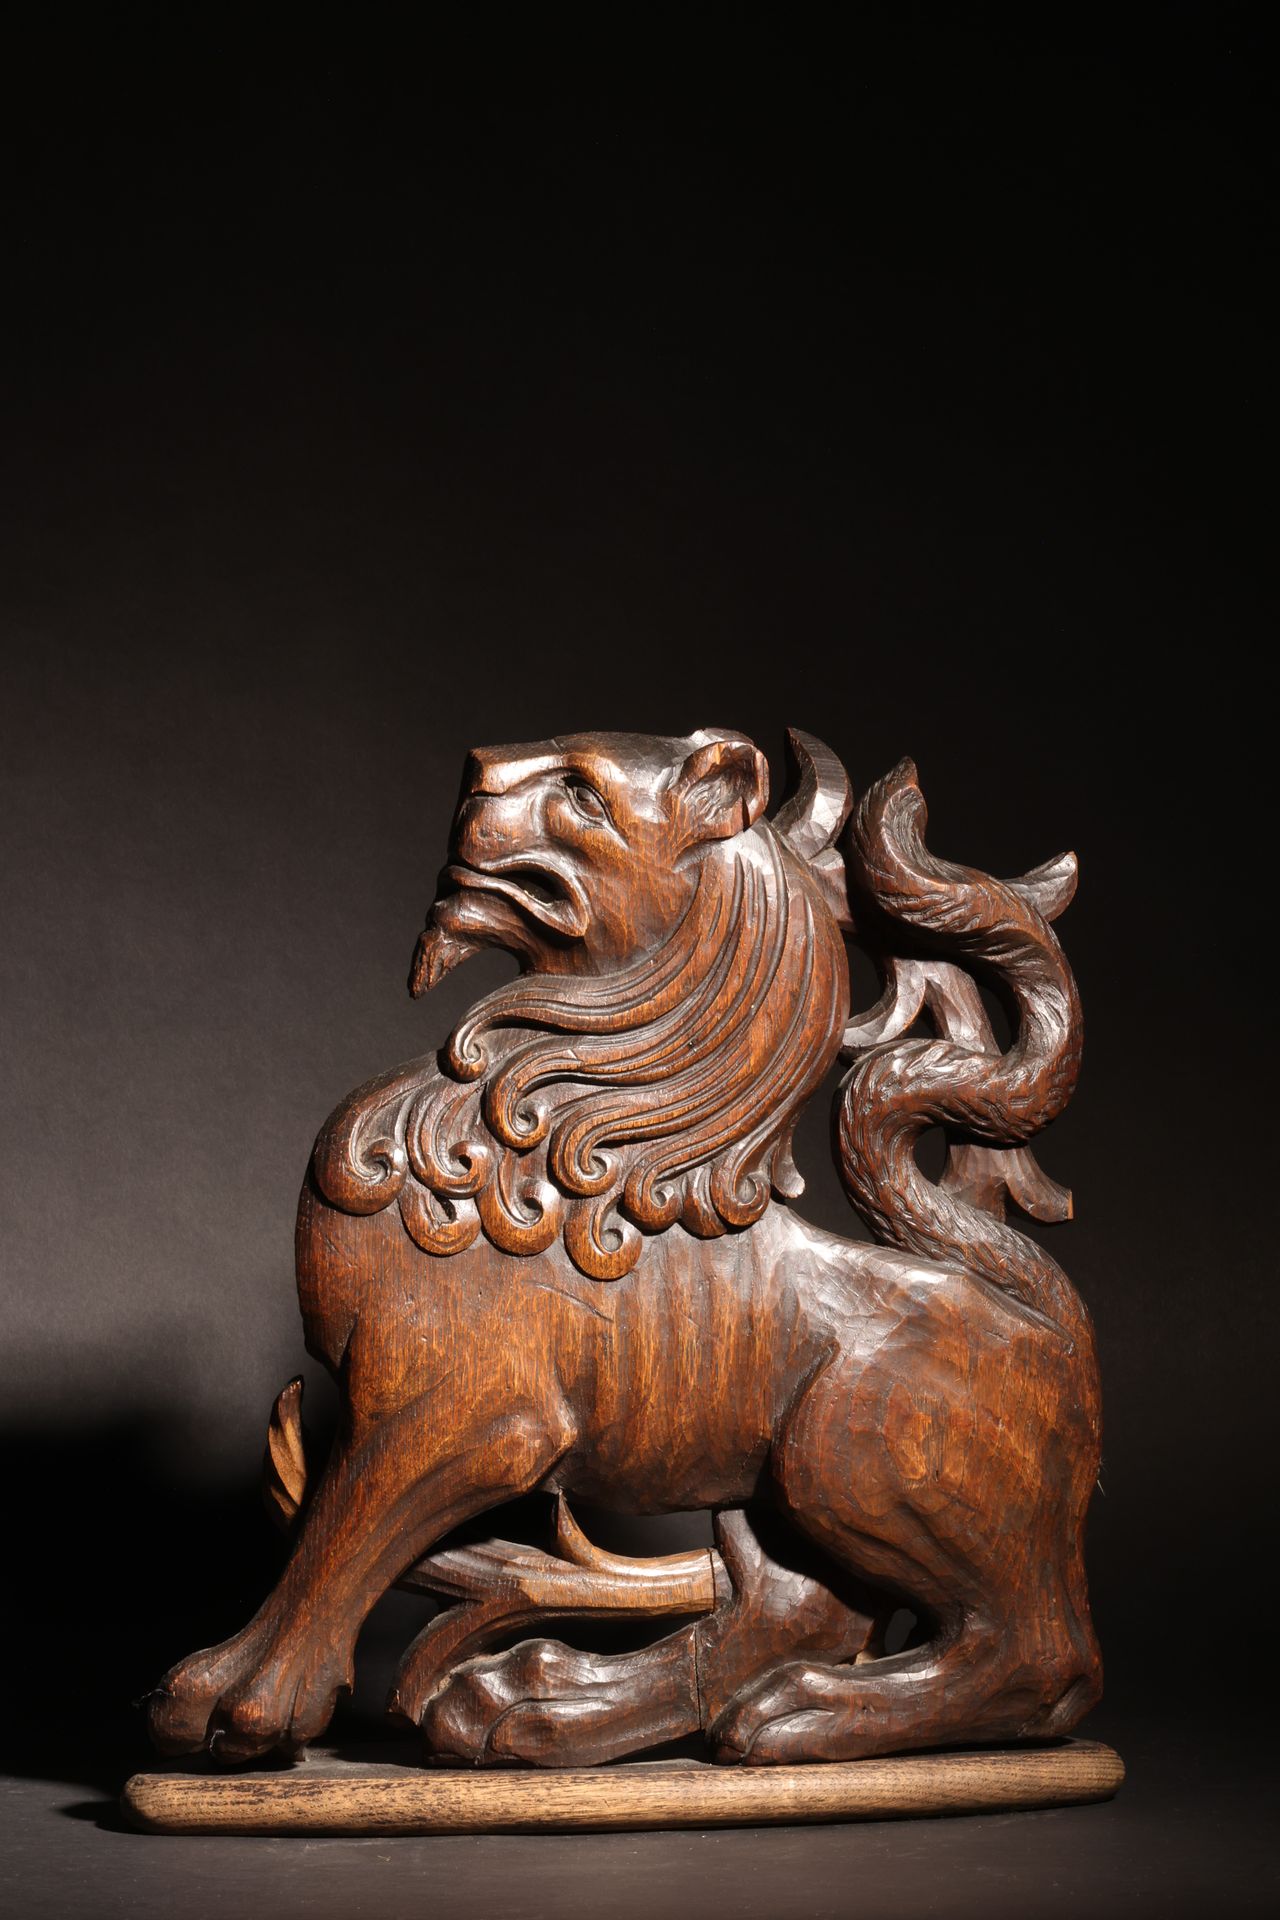 A Large Antique Wooden Carving of a Lion Grande scultura antica in legno raffigu&hellip;